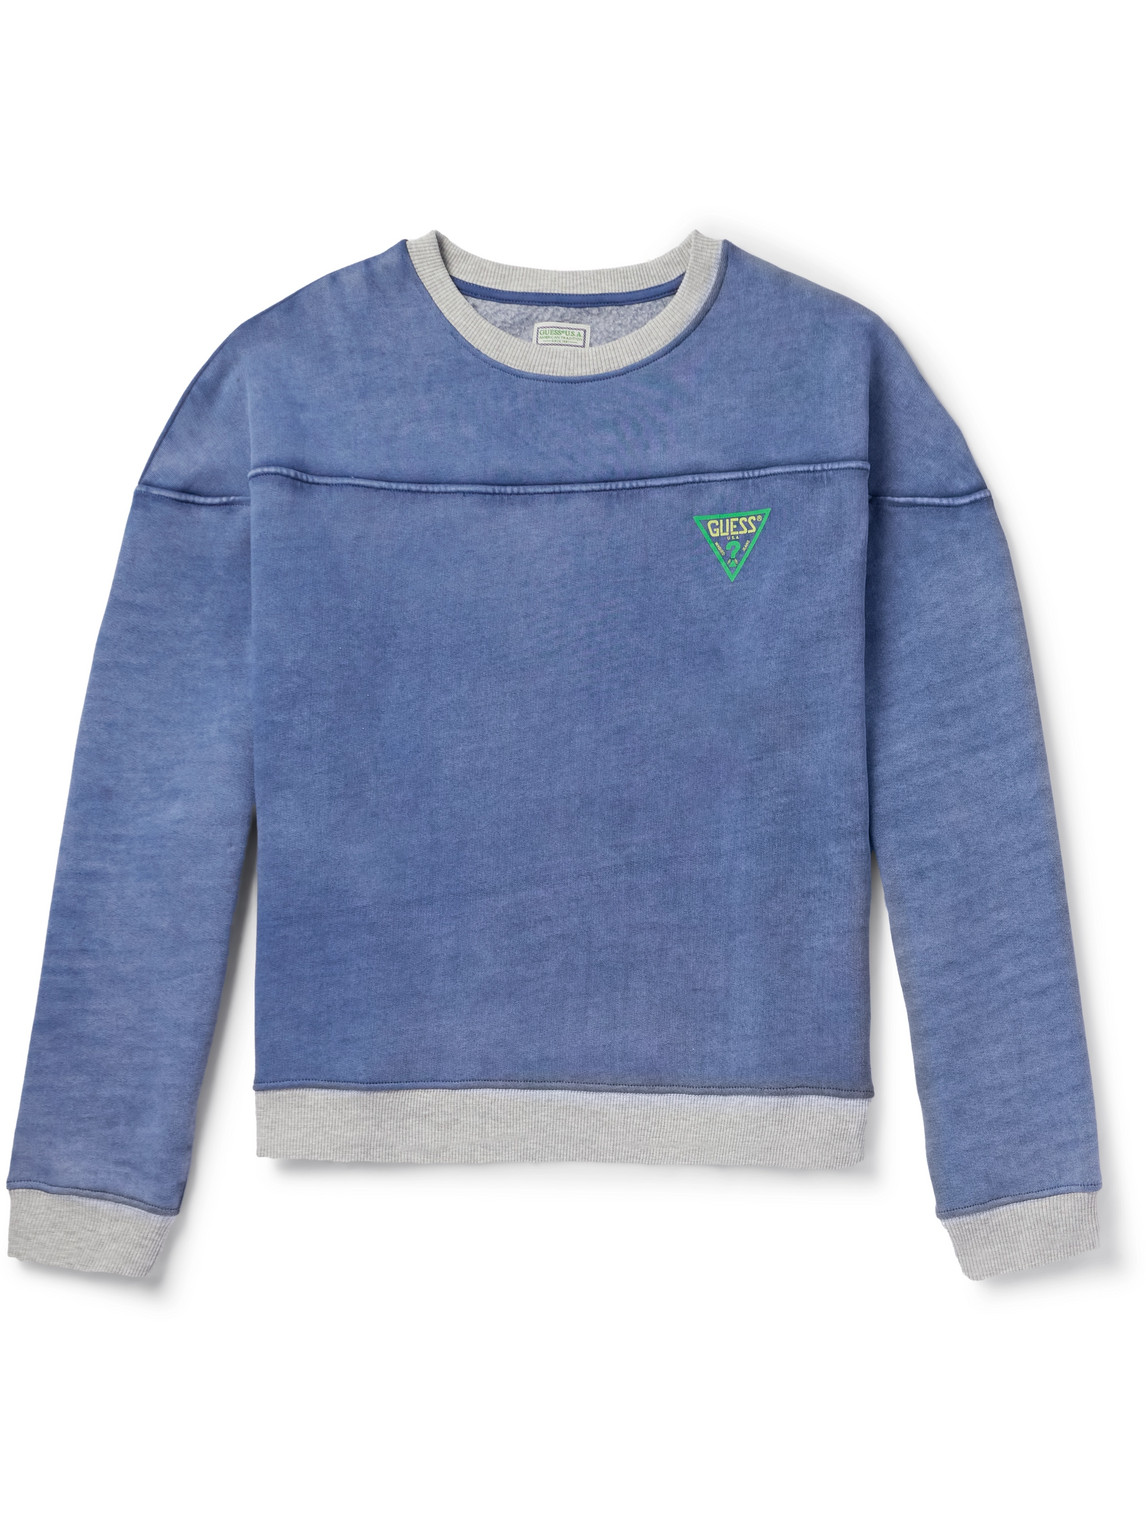 Guess USA Printed Cotton-Blend Jersey Sweatshirt